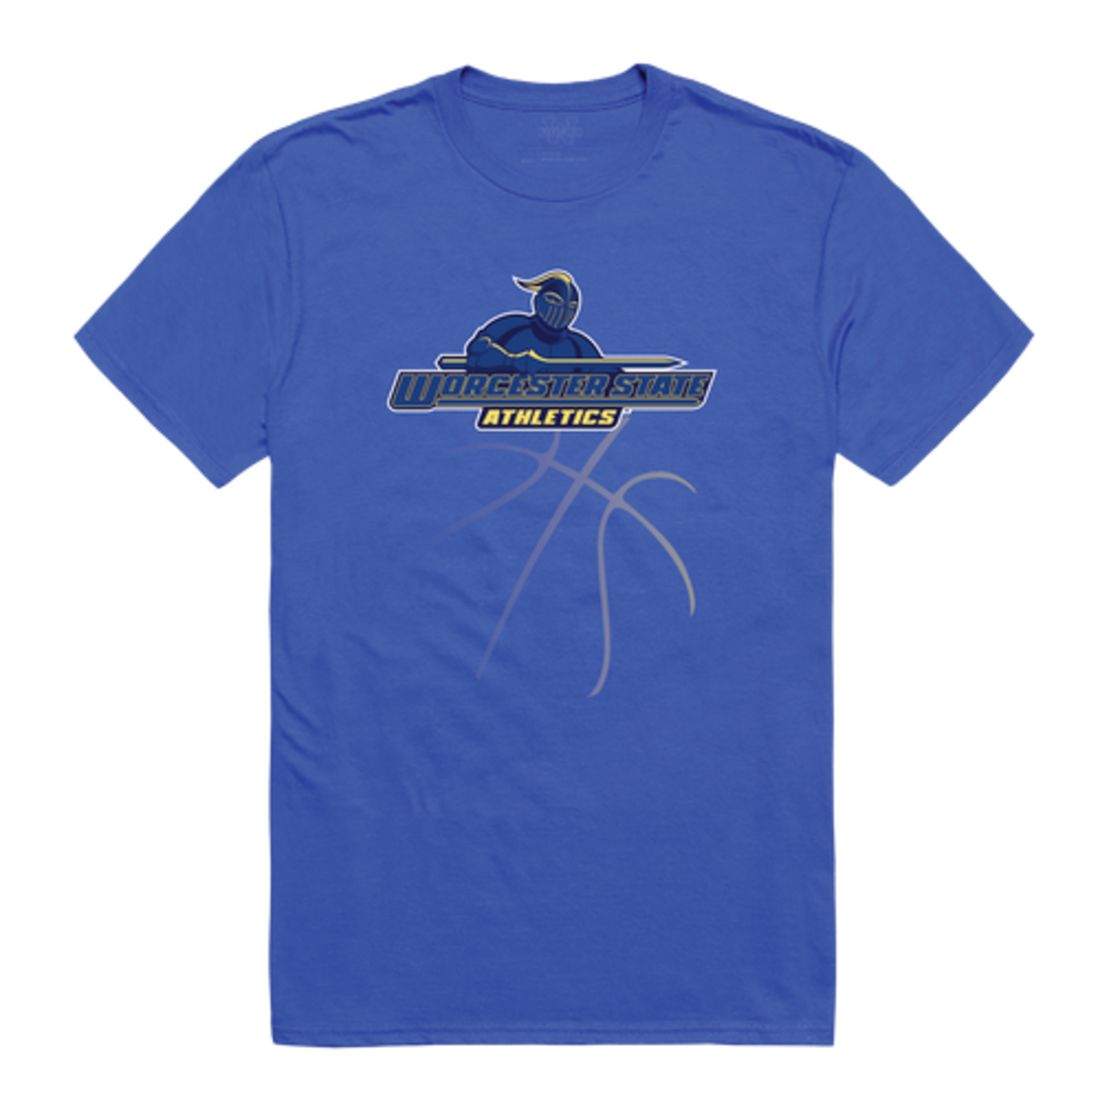 Worcester State University Lancers Basketball T-Shirt Tee